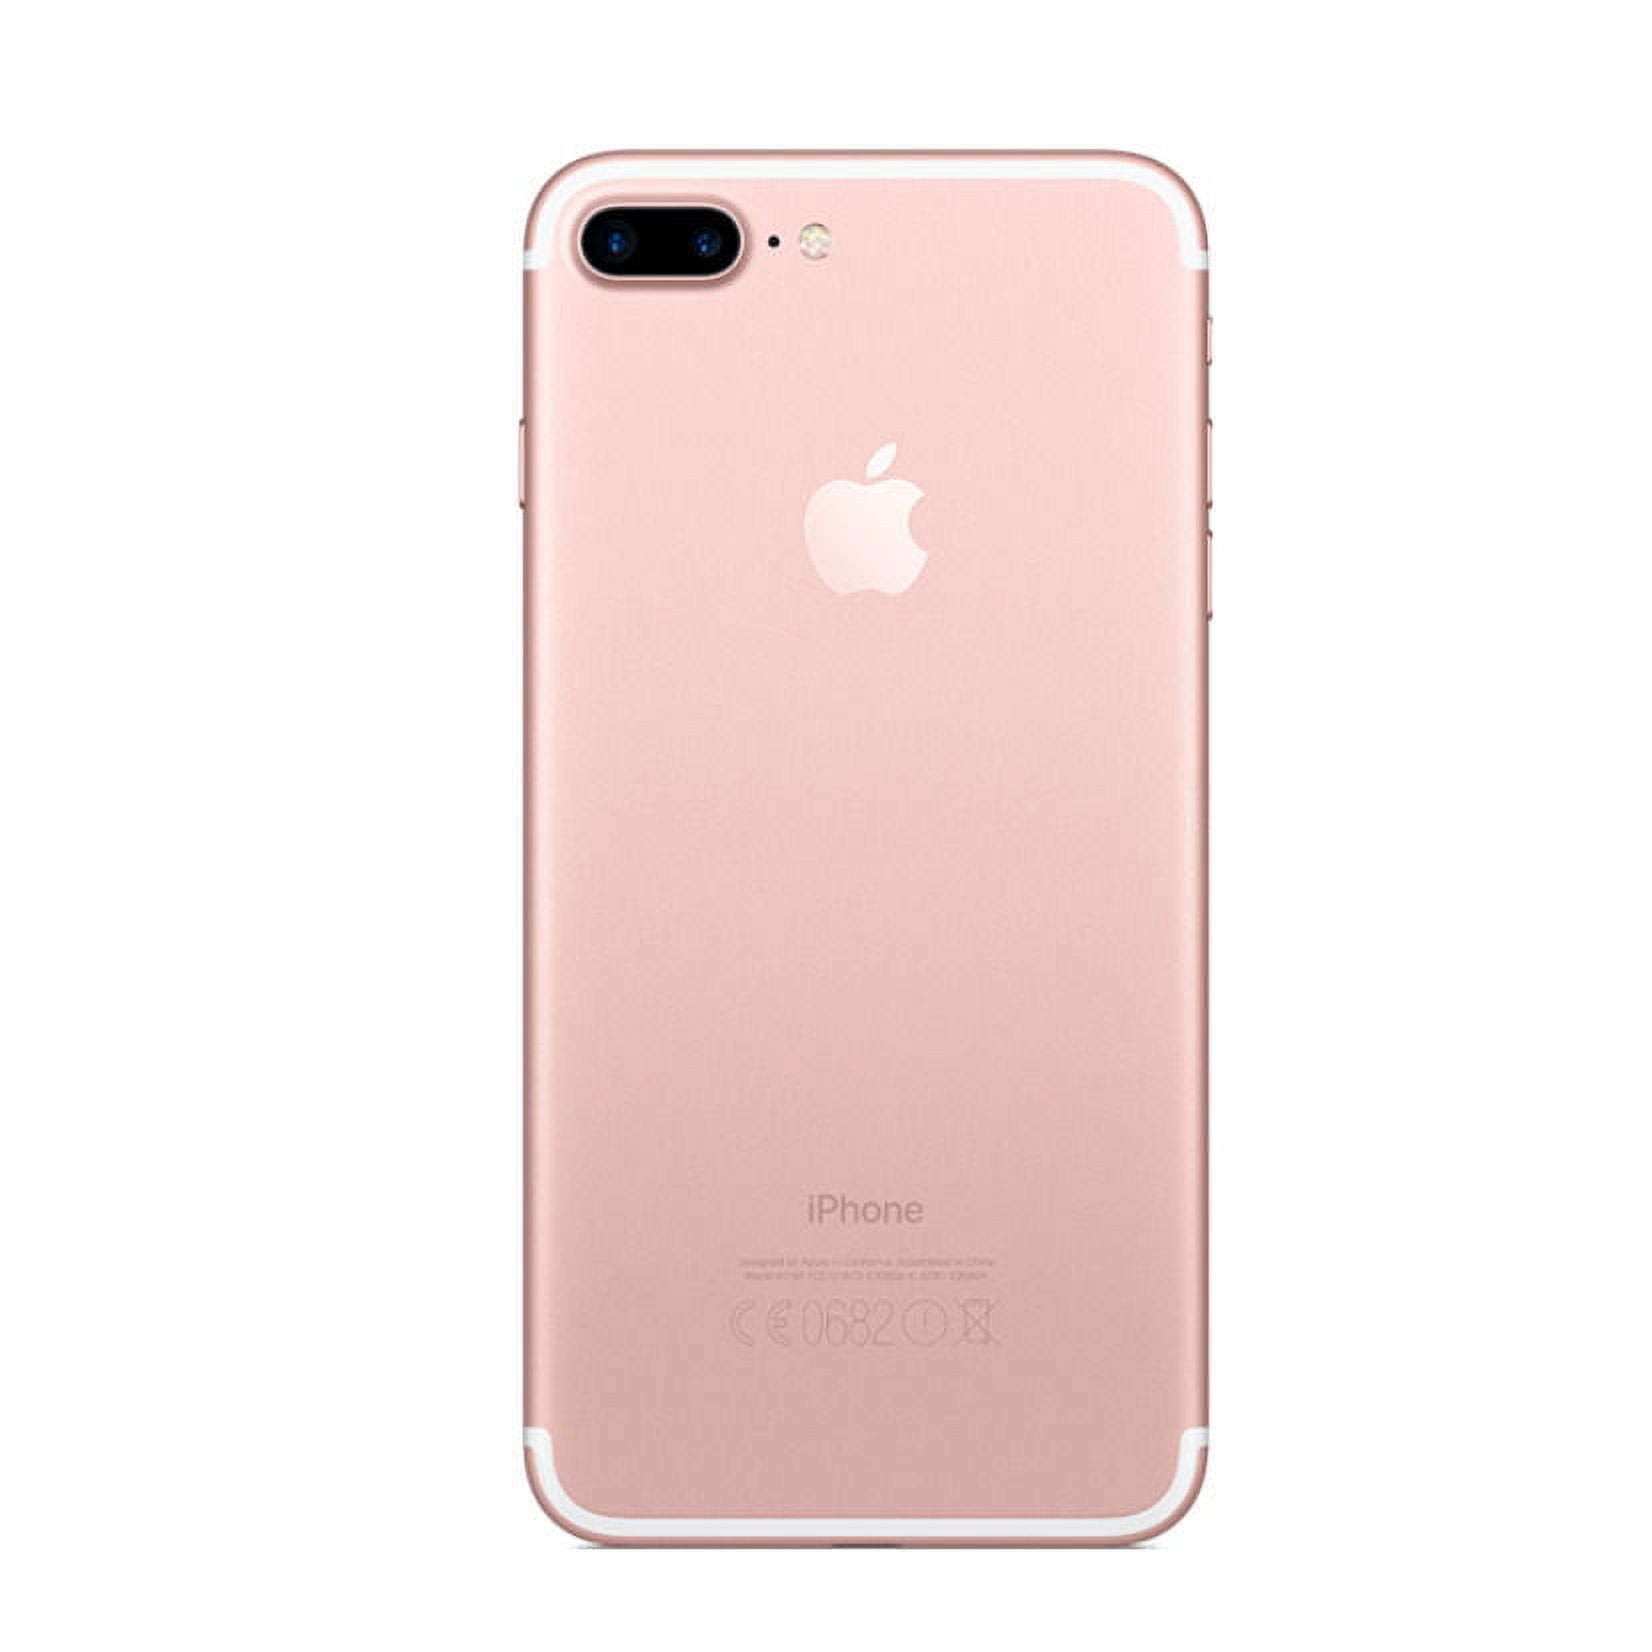 Apple iPhone 7 Plus 256GB Unlocked GSM Smartphone Multi Colors (Rose  Gold/White) (Refurbished: Good)